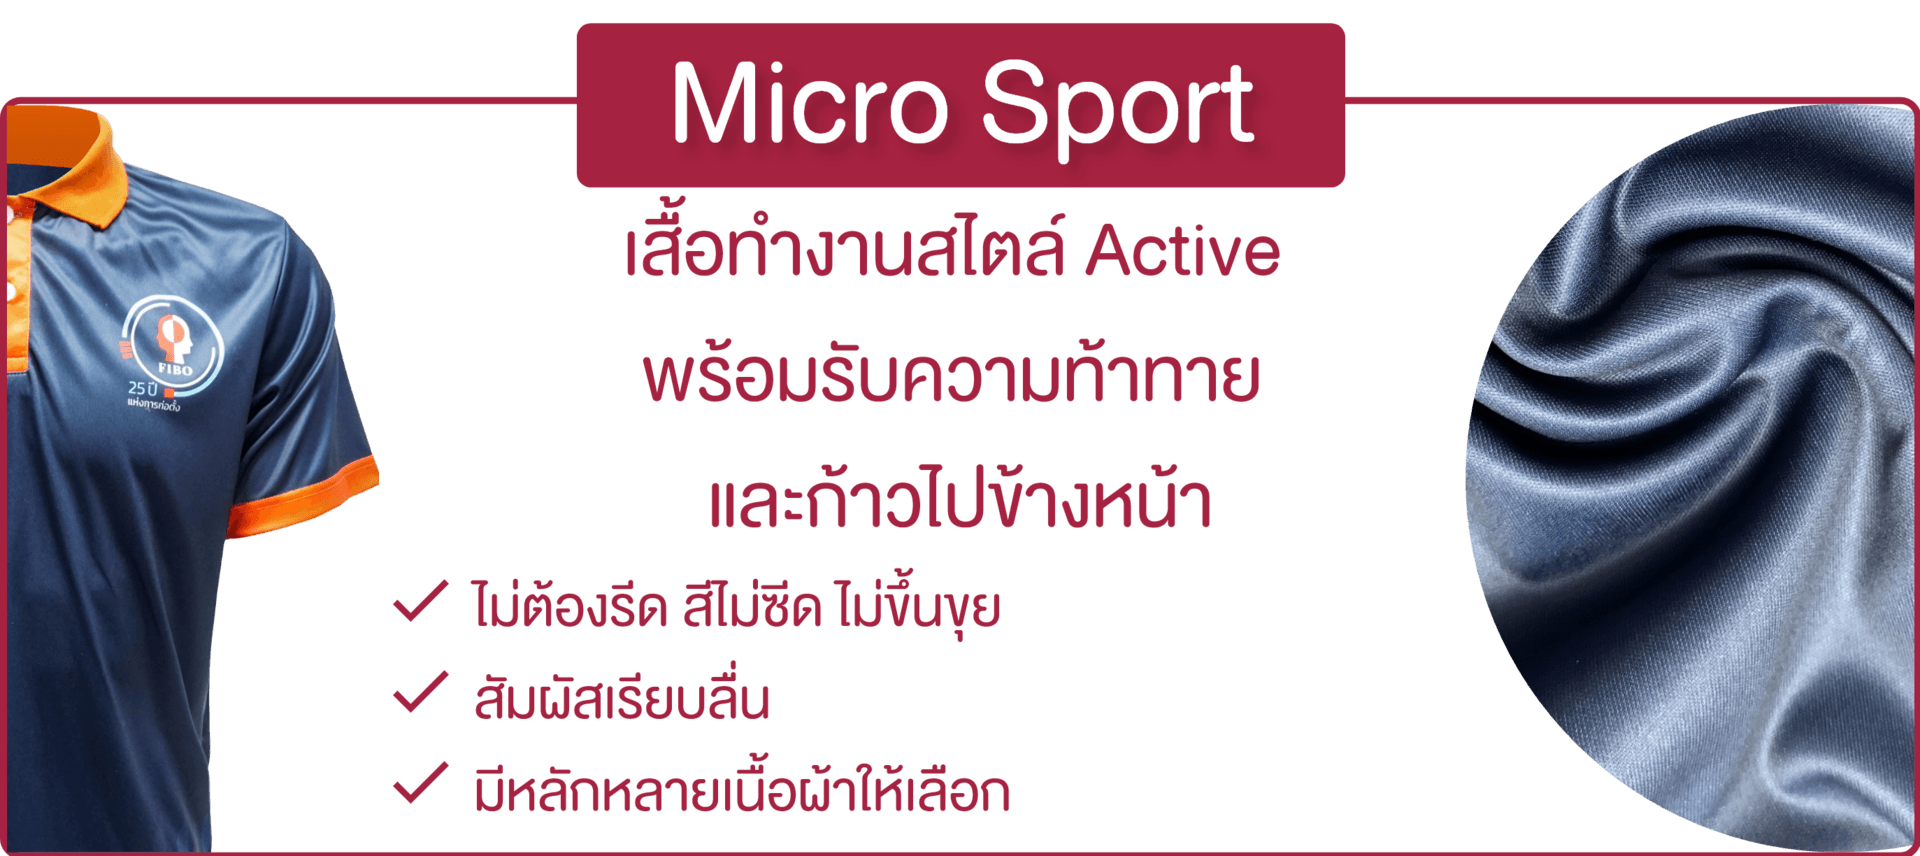 Micro Sport details